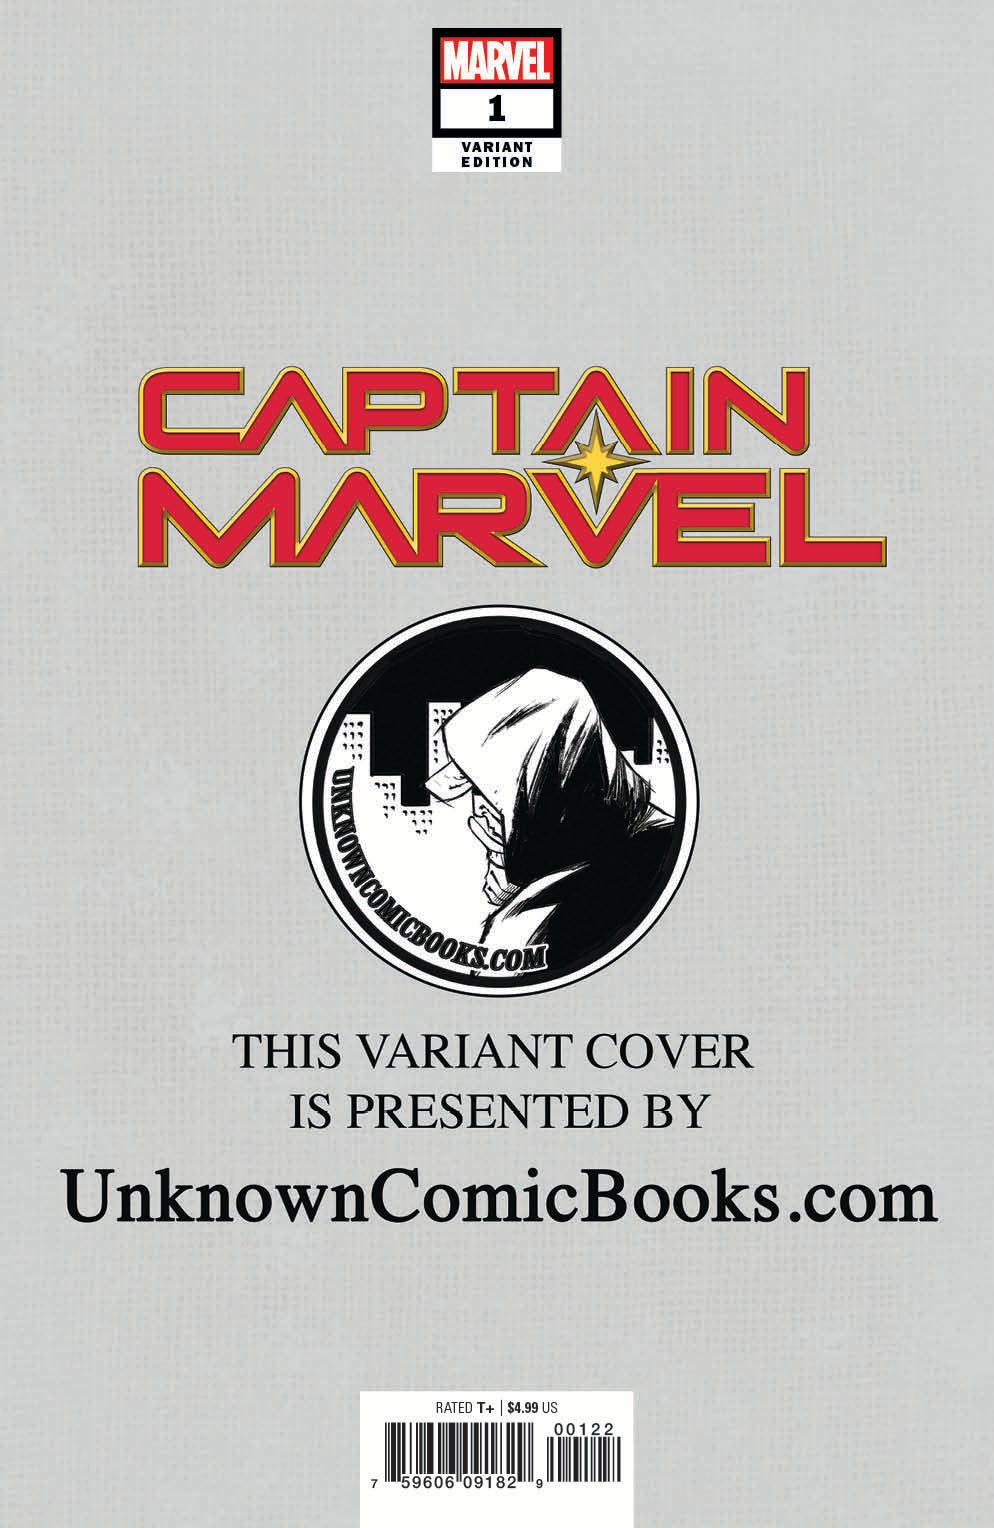 CAPTAIN MARVEL #1 UNKNOWN COMIC BOOKS EXCLUSIVE CAPTAIN MARVEL 1/9/2019